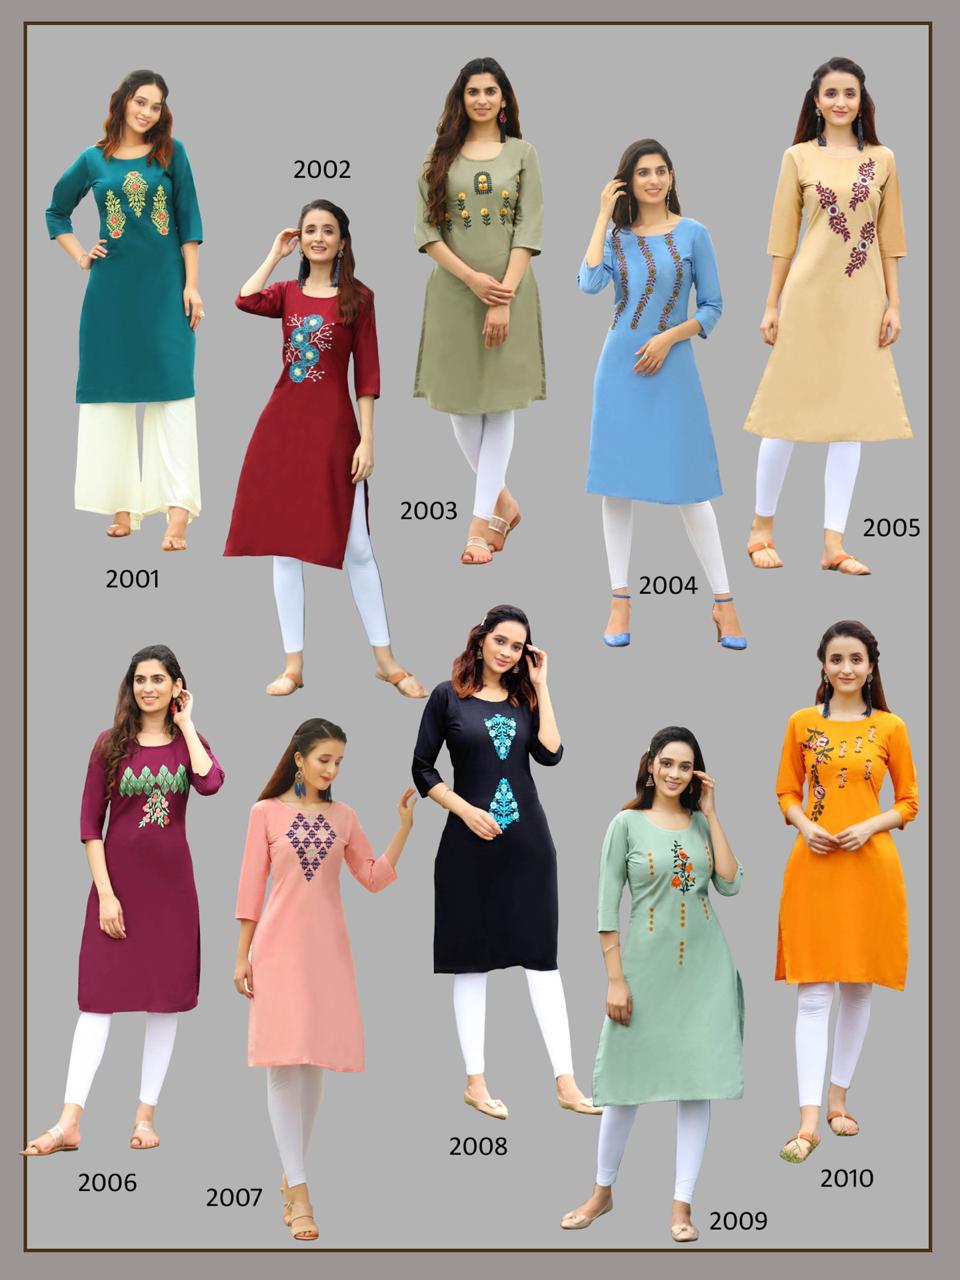 Aradhana Presents Fashion Rainbow Vol-2 Daily Wear Cotton Straight Kurtis Catalog Wholesaler